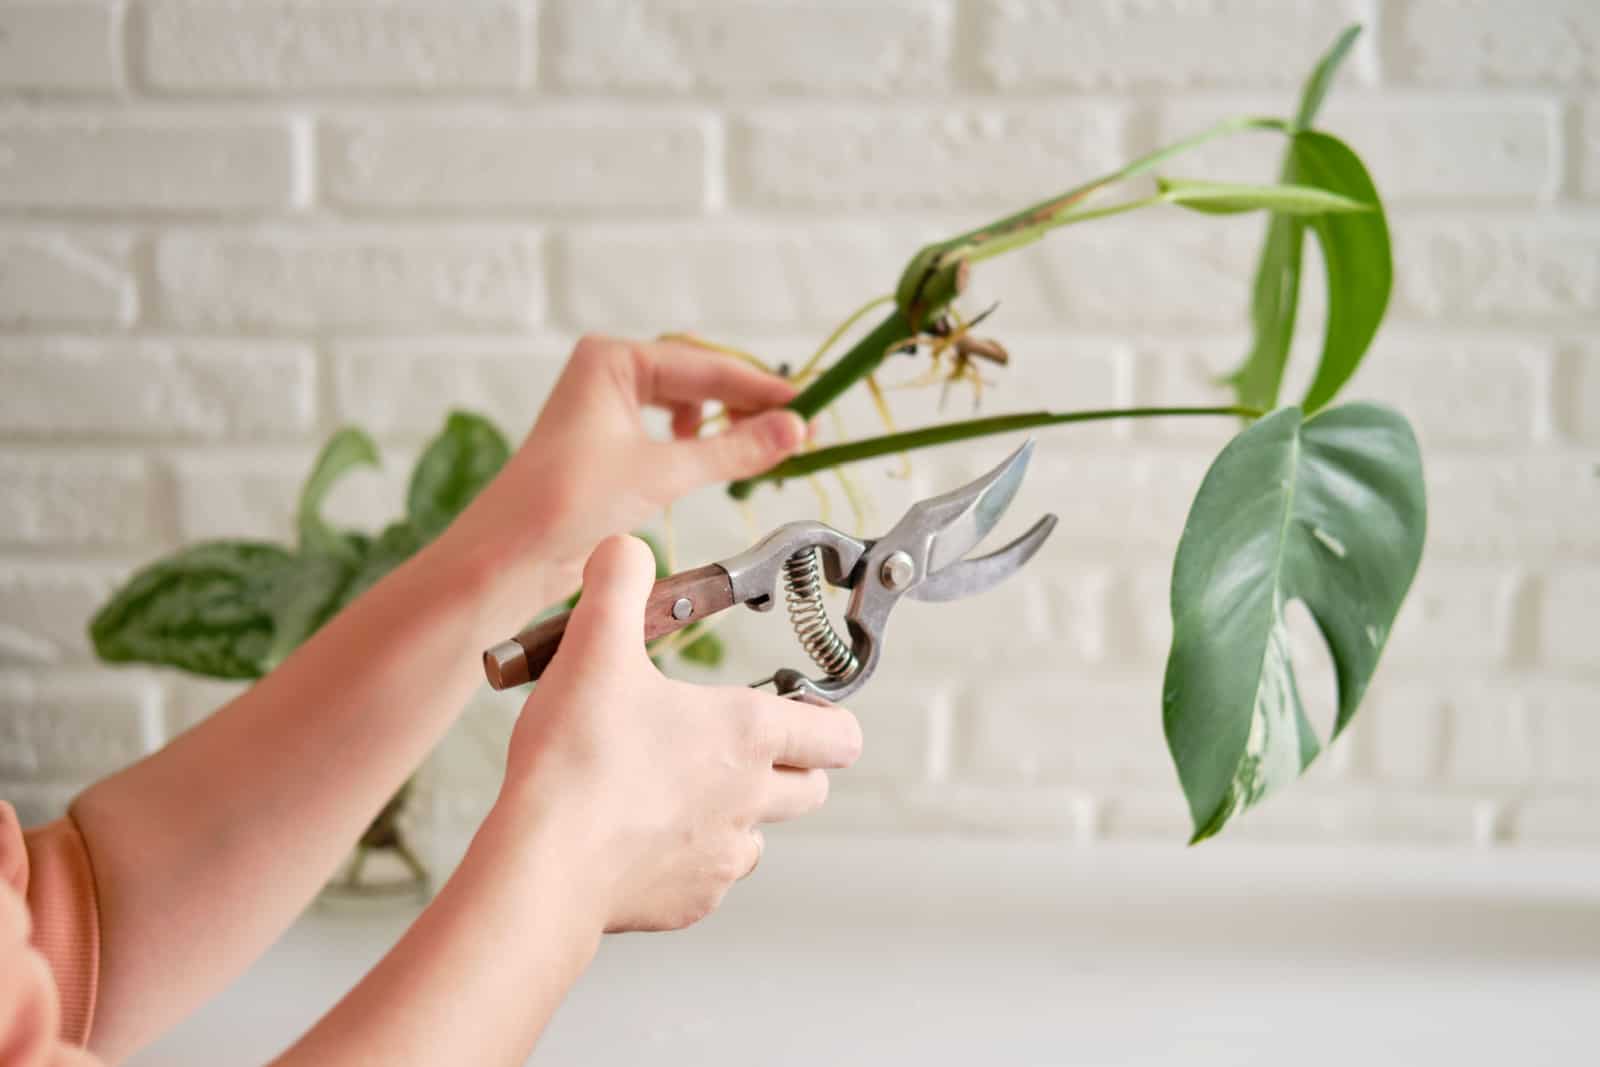 Woman florist cuts monstera albo plant with garden scissors